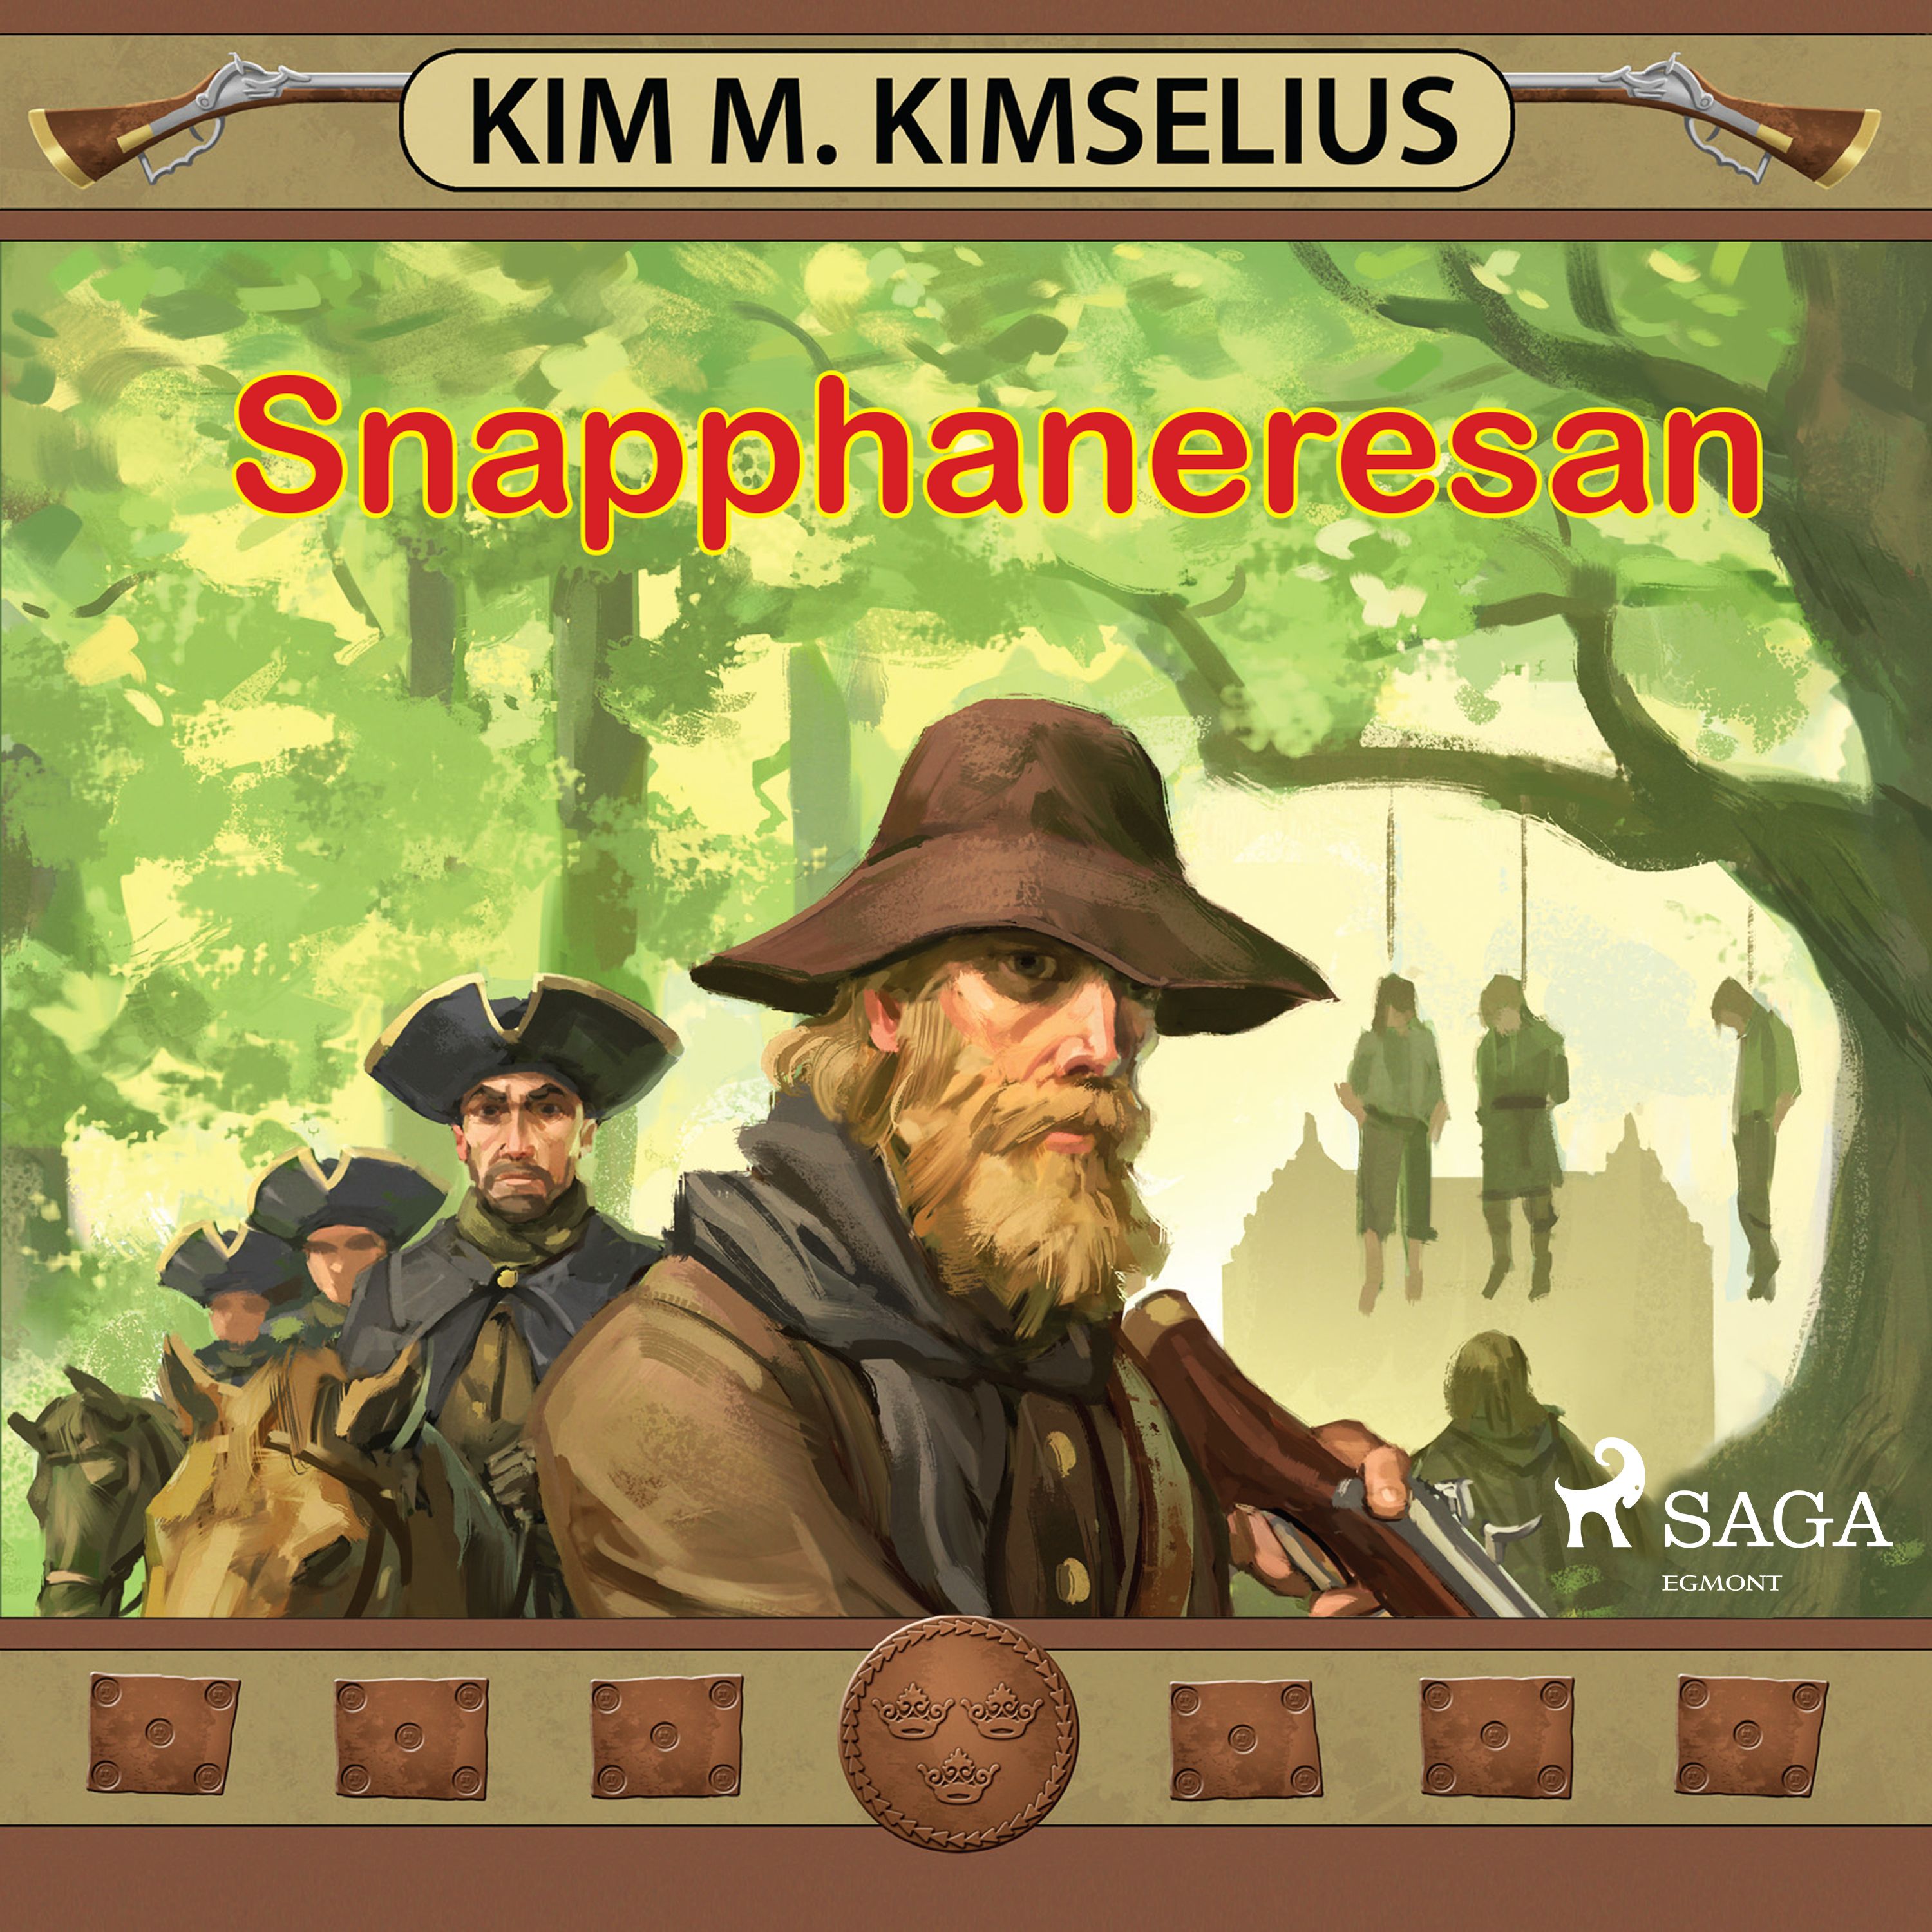 Snapphaneresan, audiobook by Kim M. Kimselius